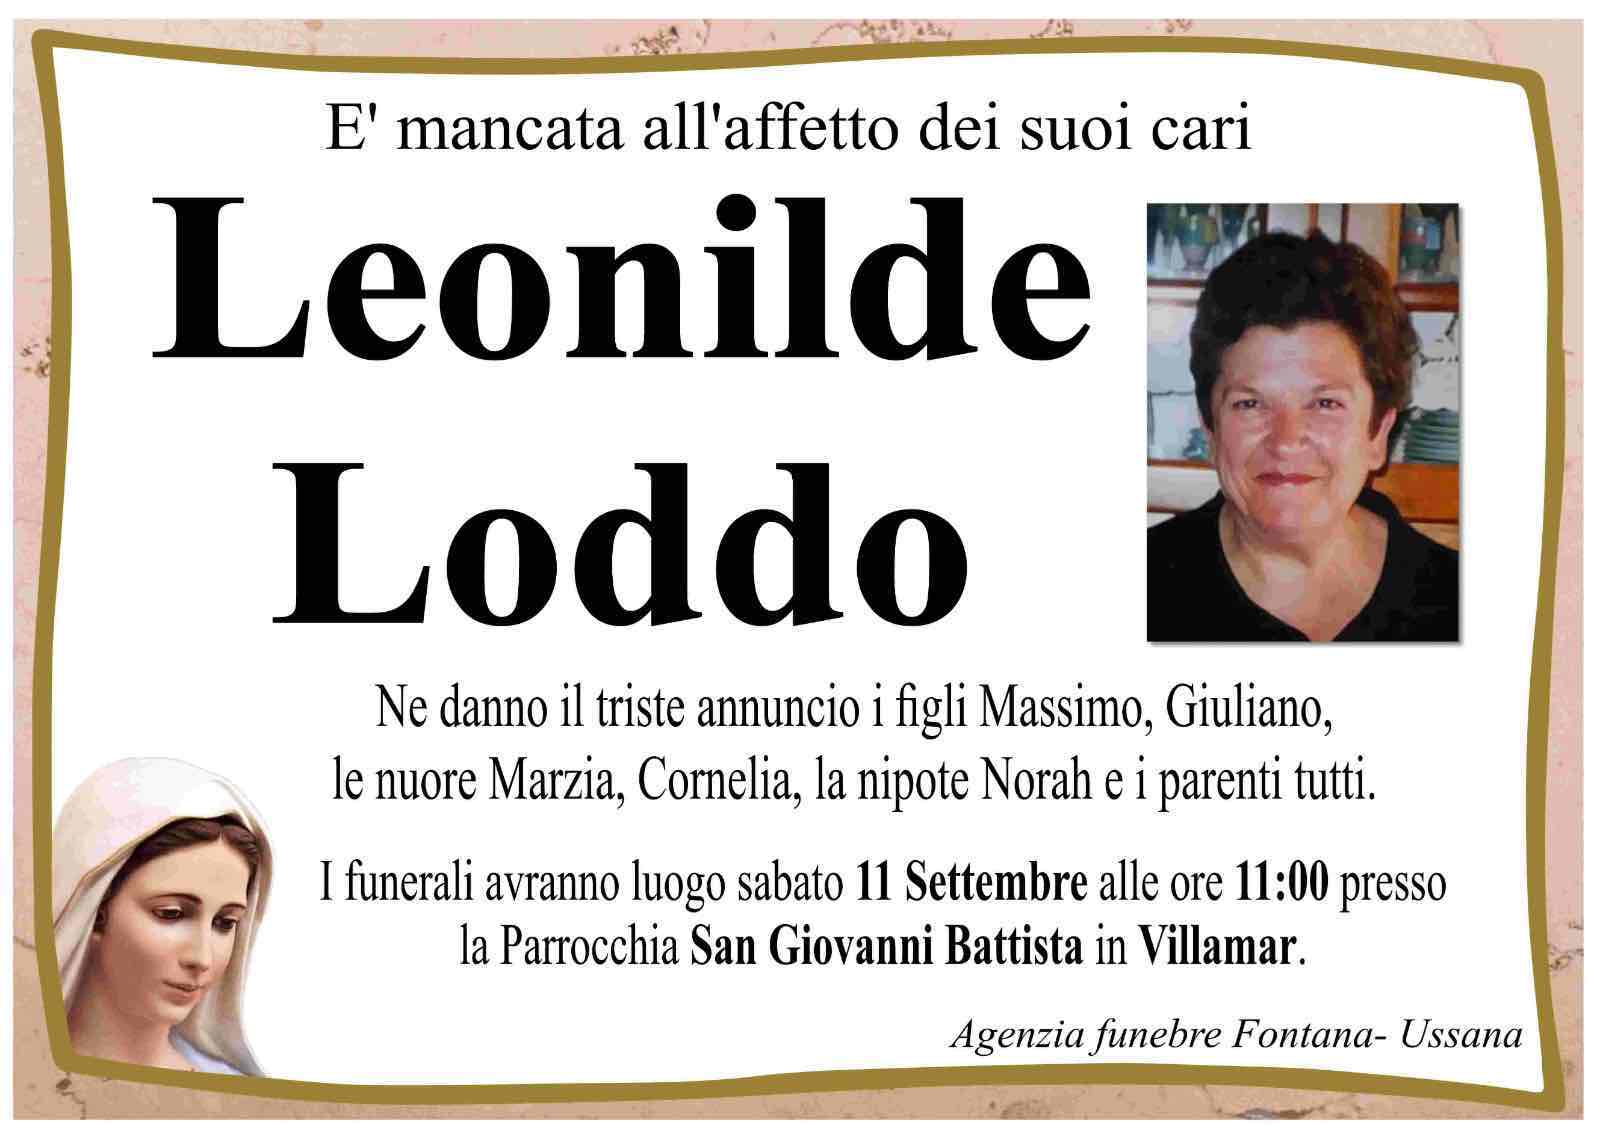 Leonilde Loddo